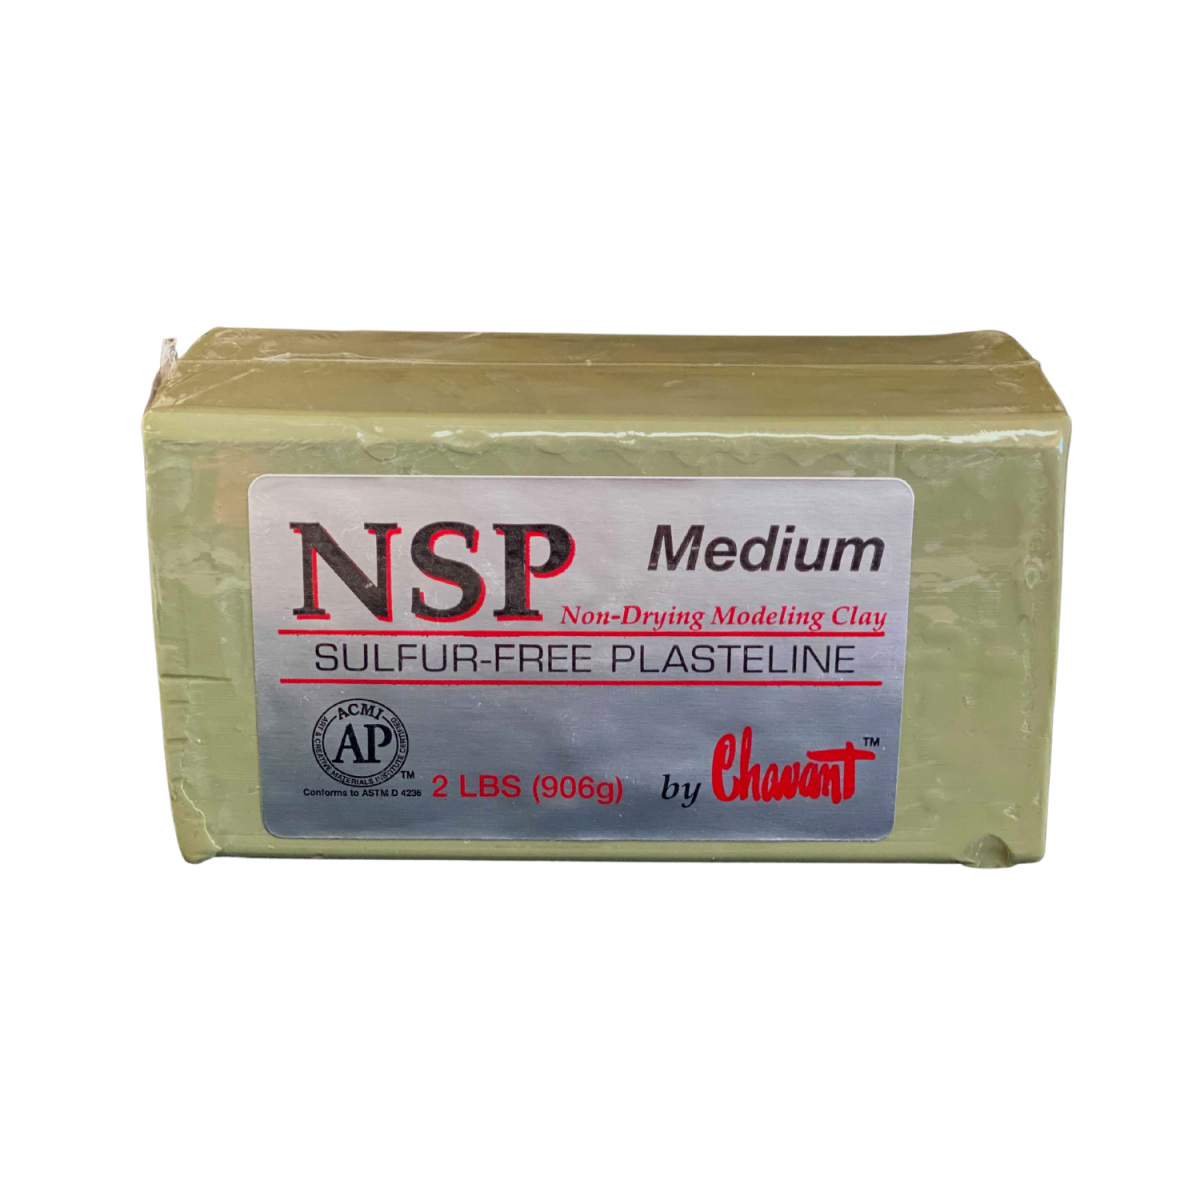 Chavant NSP Medium Non-Drying Modeling Clay Green